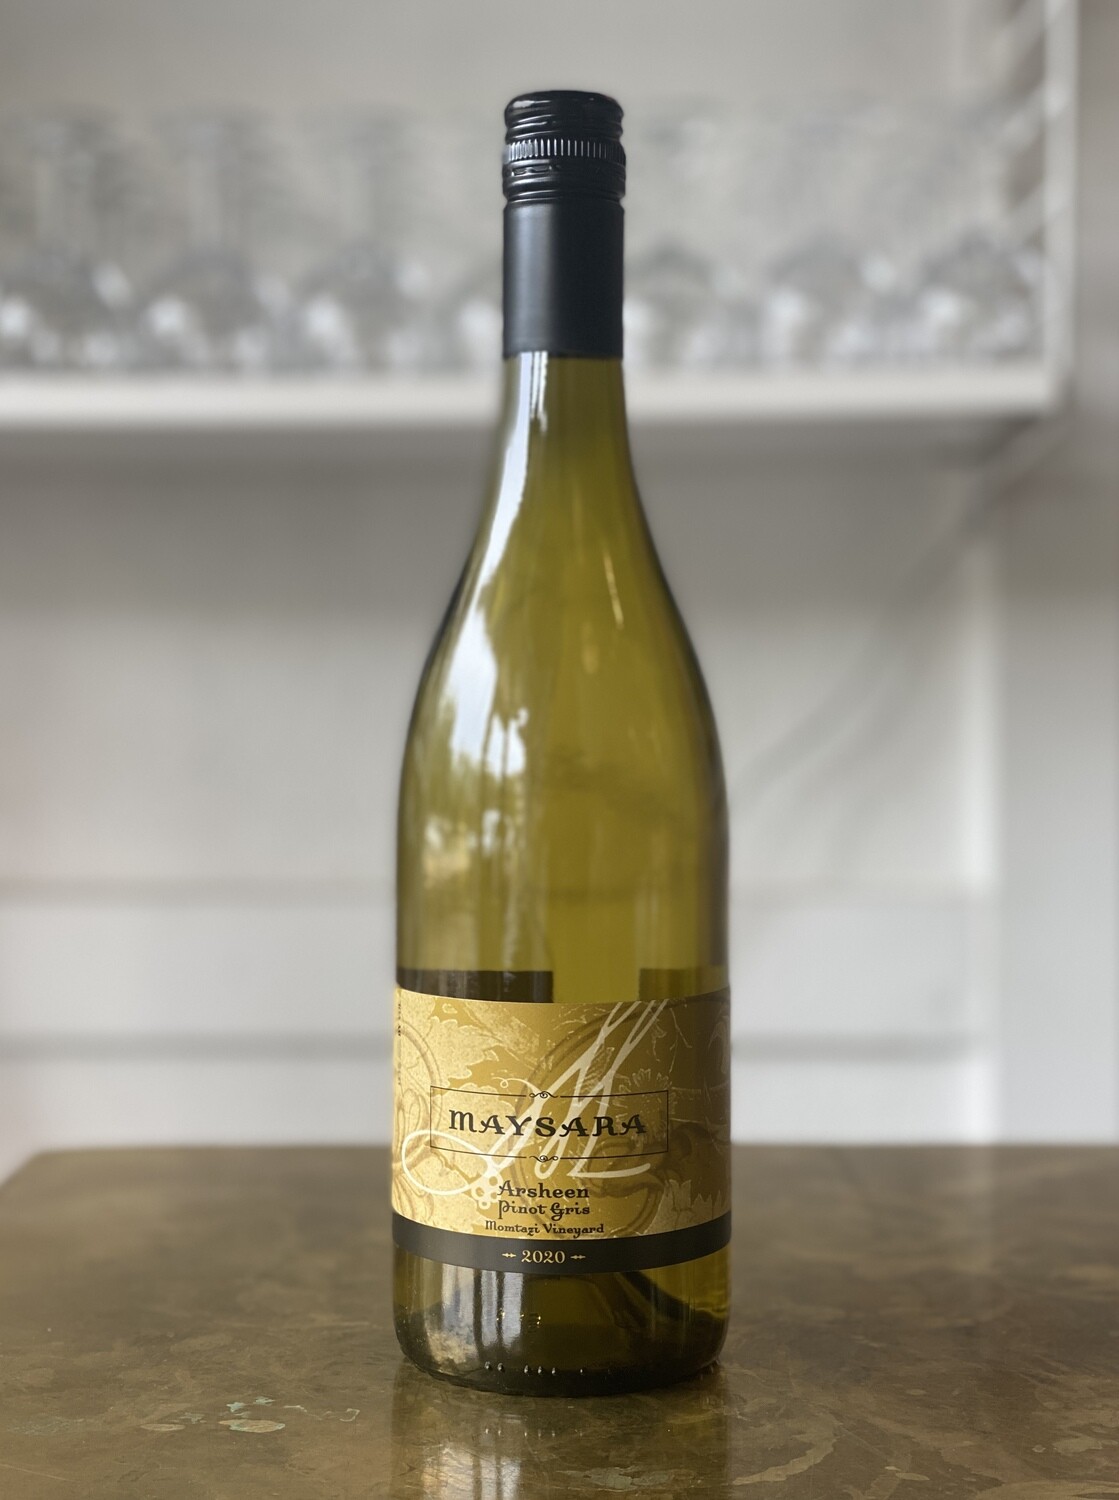 Maysara Winery, Arsheen Pinot Gris (2020)